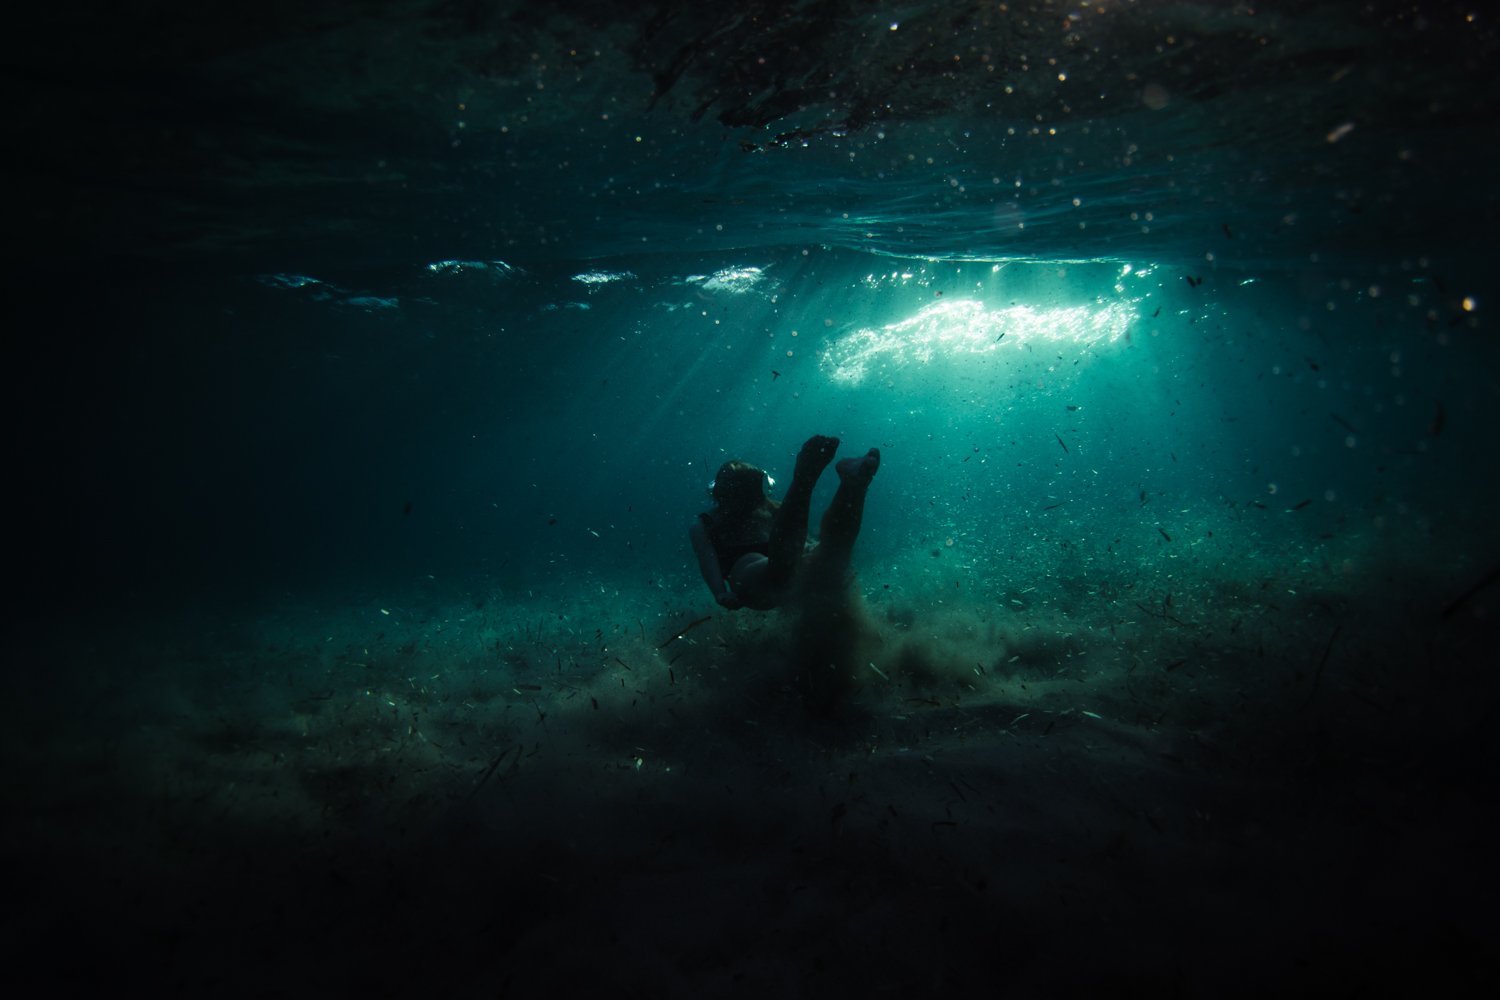 underwater corse corsica sea mediterranean island france french photographer photographe ajaccio Krista Espino Capo di feno wave nude nue femme woman fine art photography-5.jpg